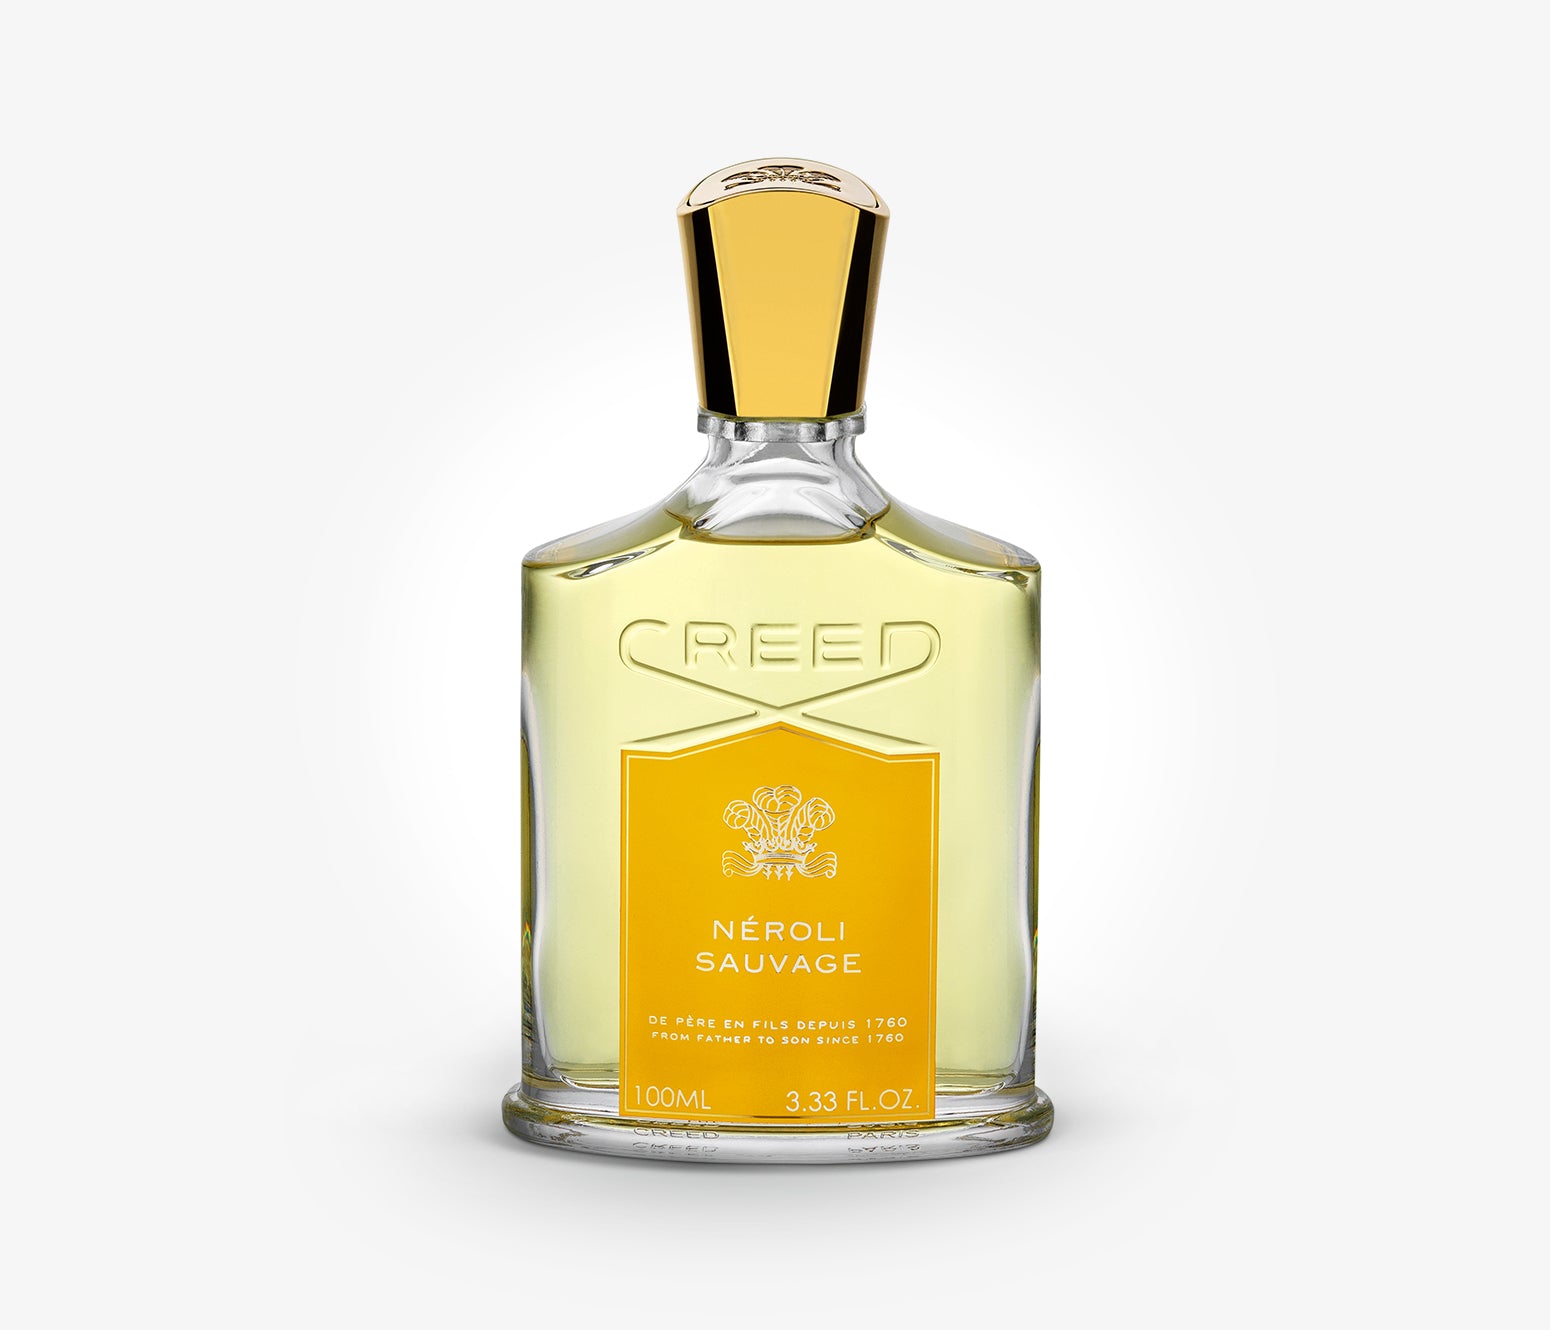 Creed - Neroli Sauvage - 100ml - 10000536 - Product Image - Fragrance - Les Senteurs